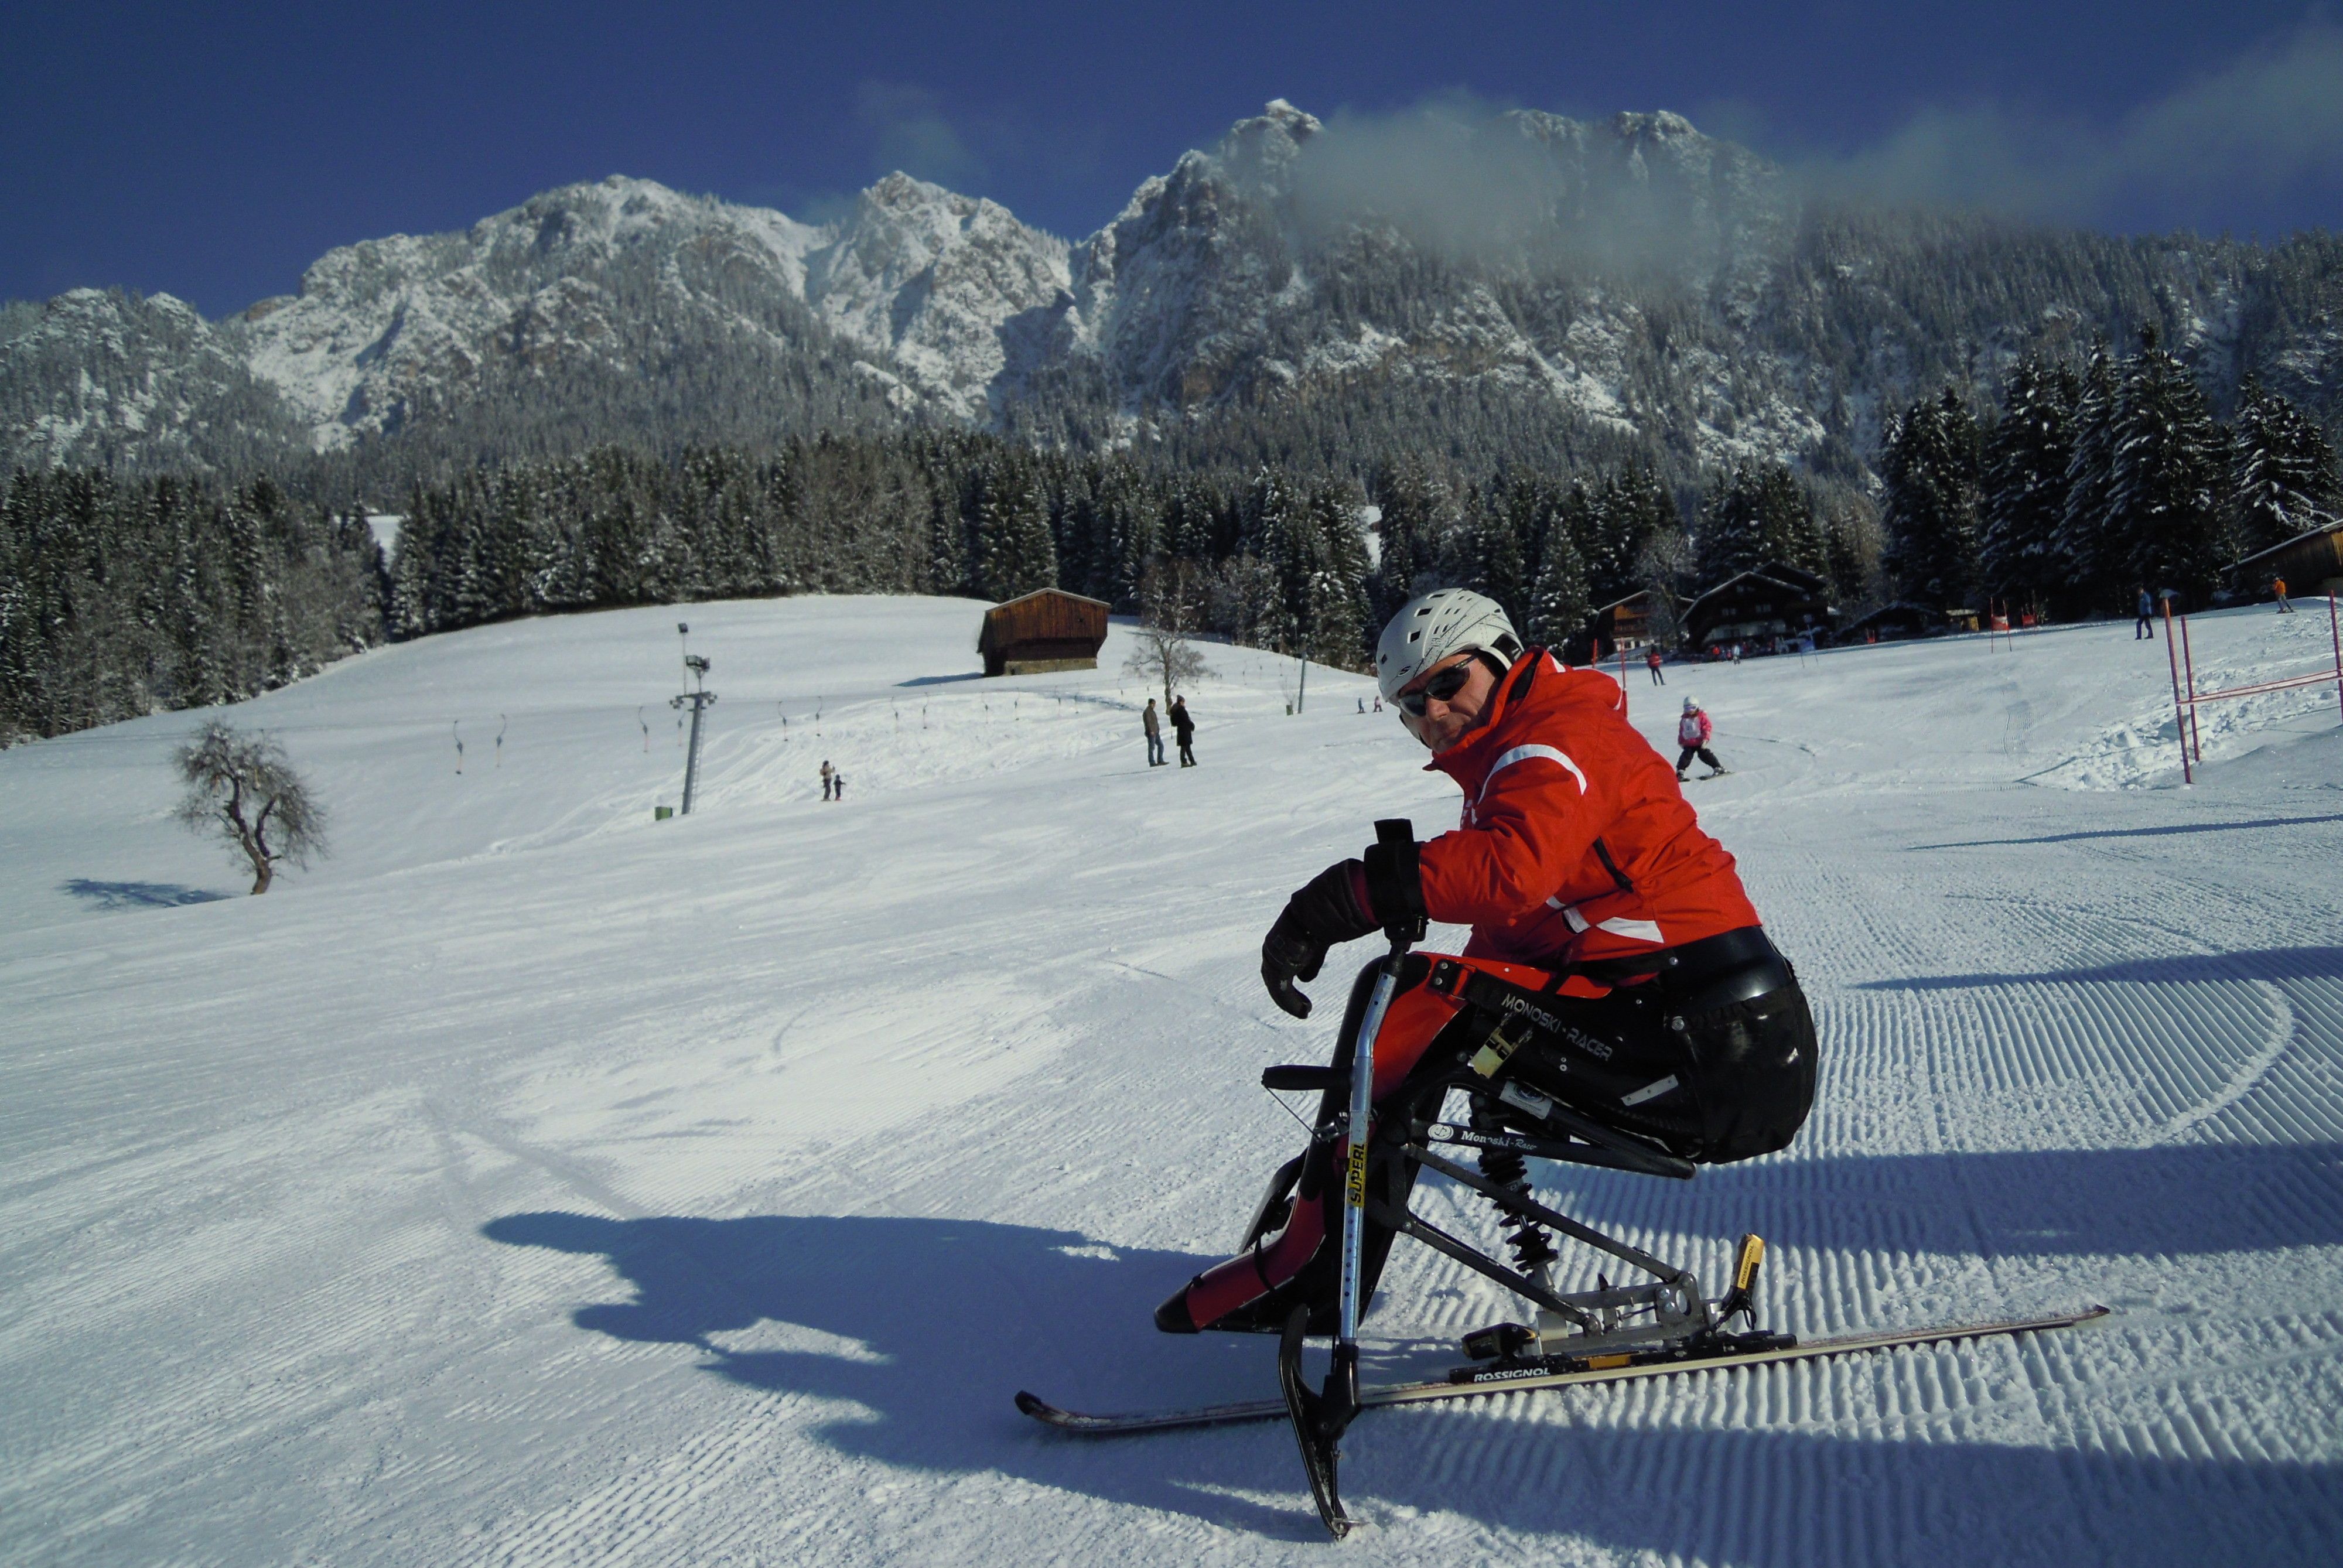 Zitskiër Sepp Margreiter is tegenwoordig skileraar in Alpbach (foto: Skischule Alpbach - Inneralpbach / Alpbachtal Seenland)